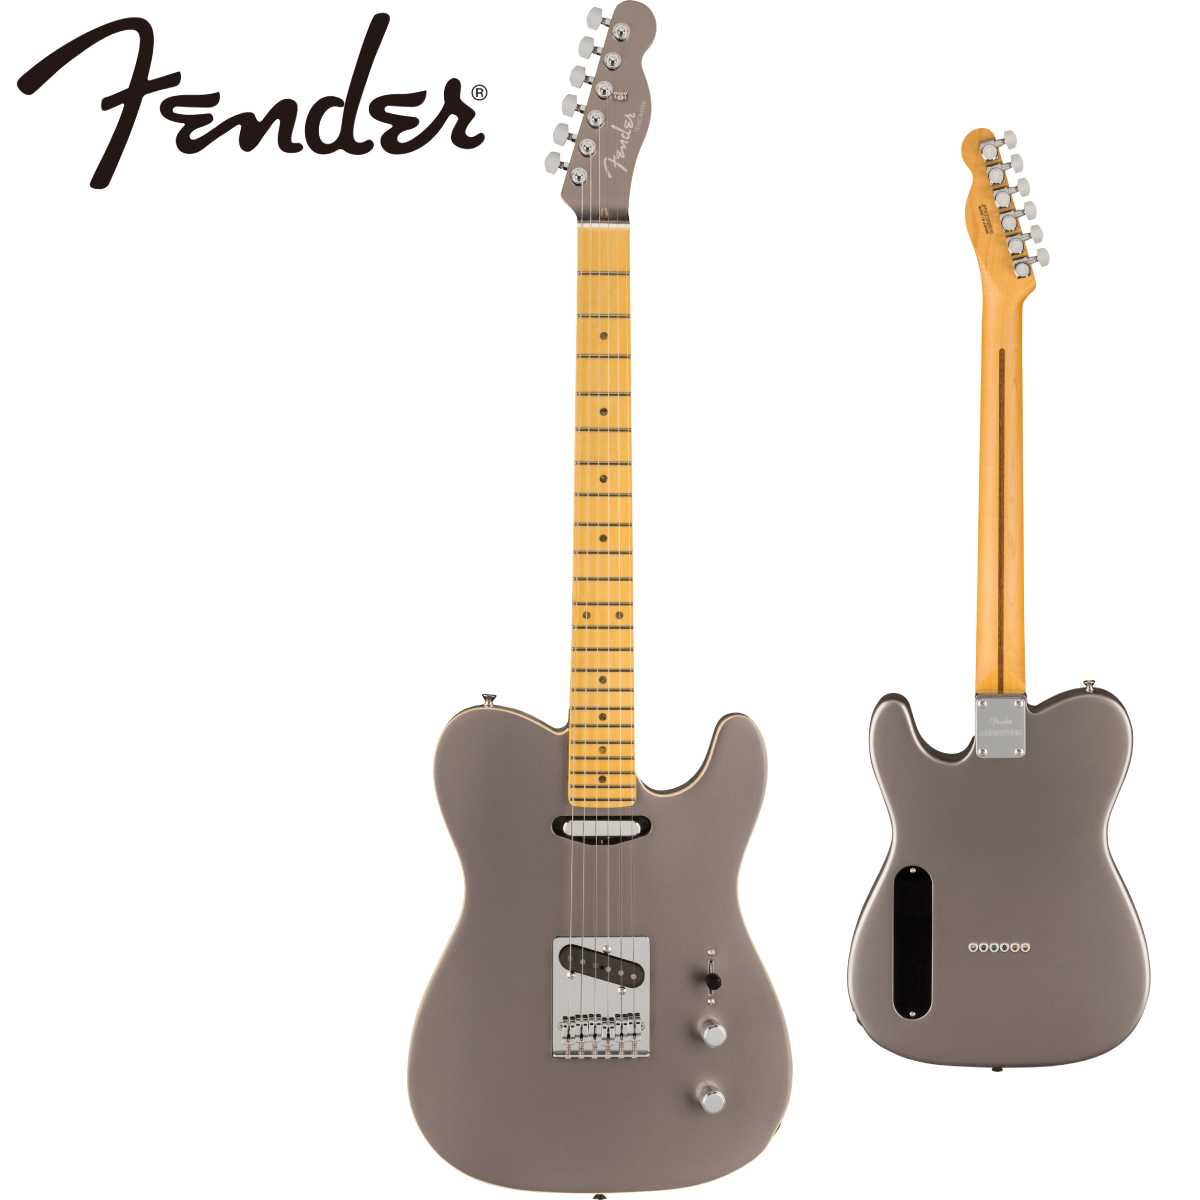 Fender Aerodyne Special Telecaster -Dolphin Gray Metallic- 新品 [フェンダー][エアロダイン][グレーメタリック,Silver,シルバー,銀][テレキャスター][Electric Guitar,エレキギター]